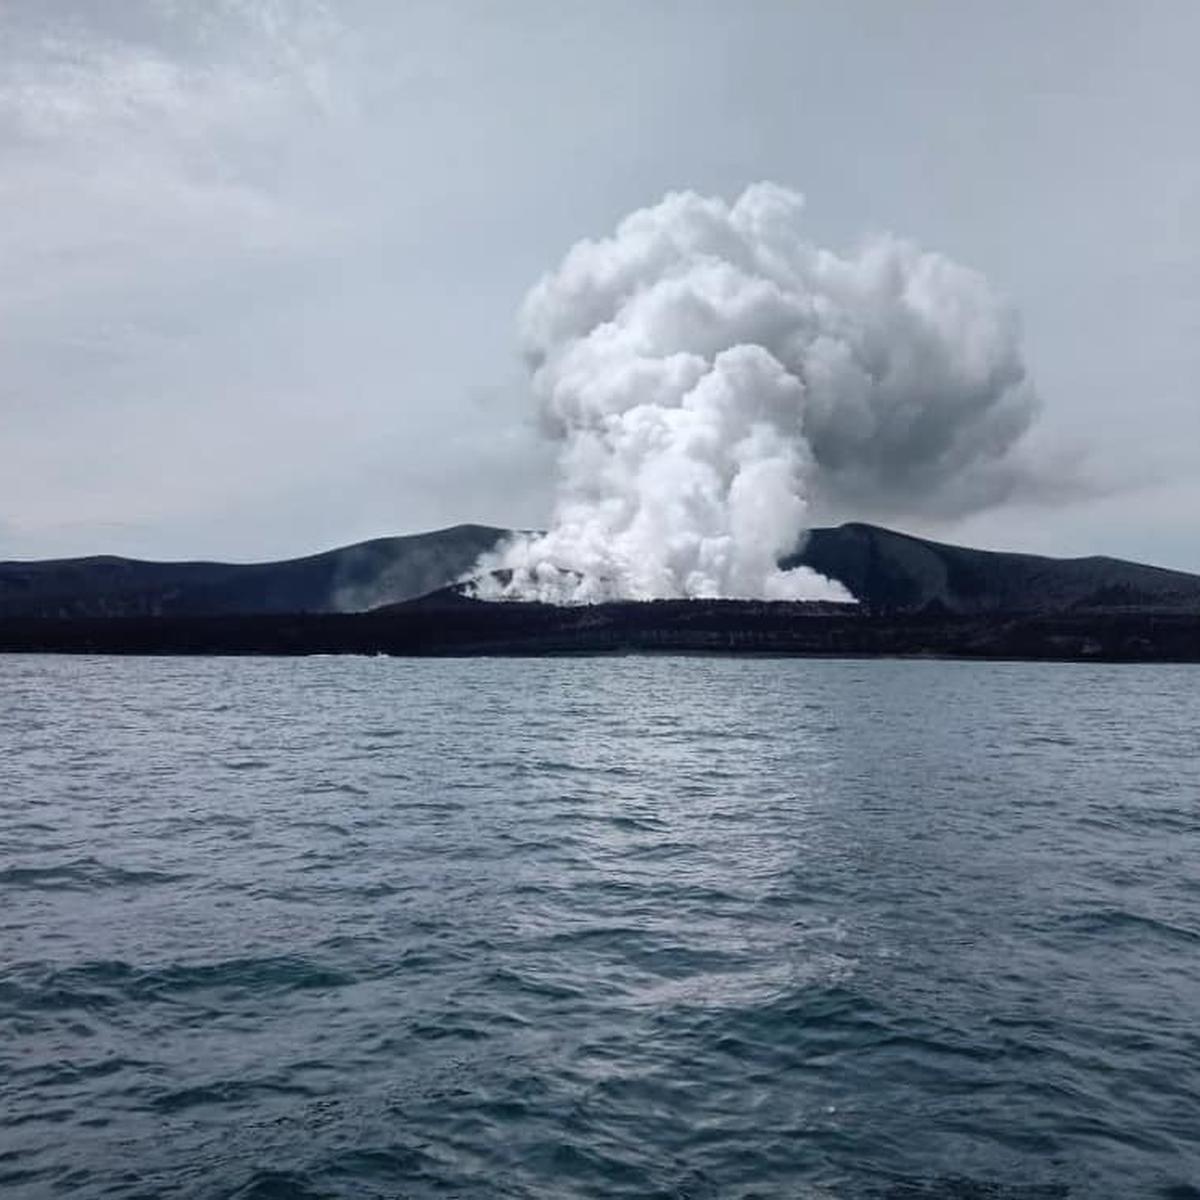 Waspada! Gunung Anak Krakatau Semburkan Abu Setinggi 750 Meter